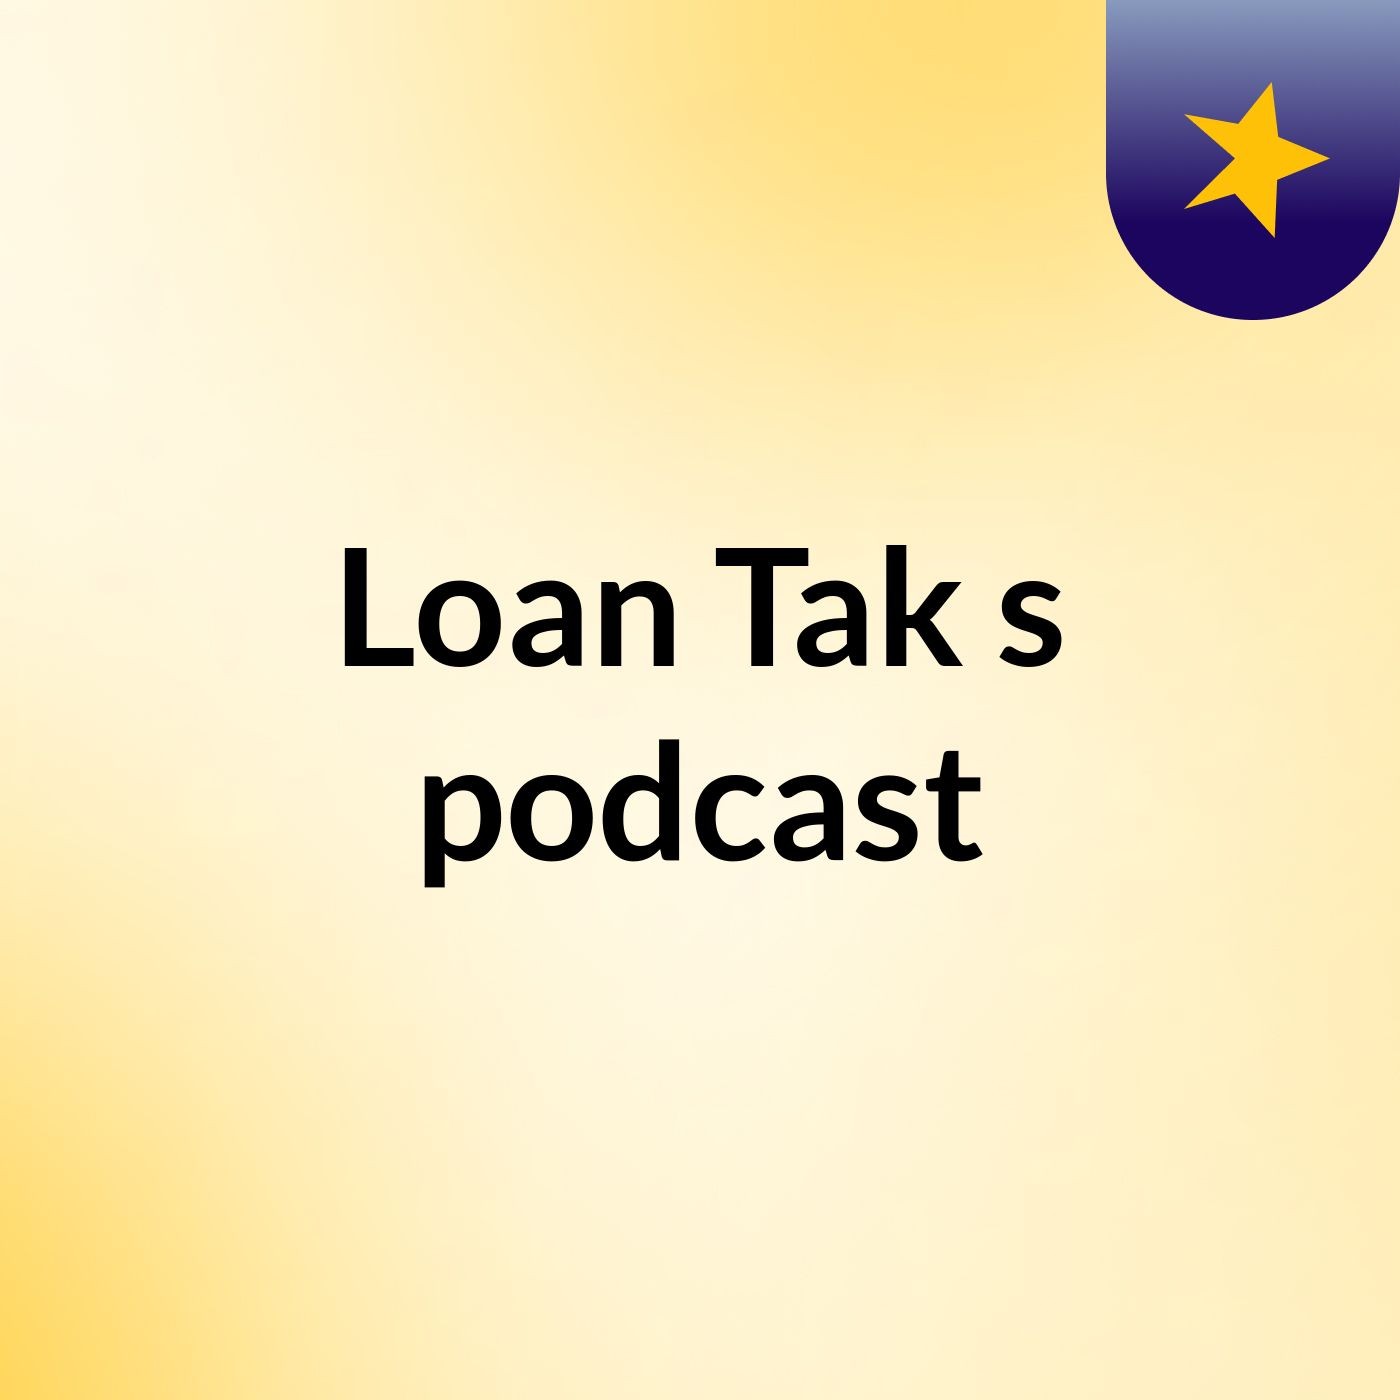 Episode 5 - Loan Tak's podcast